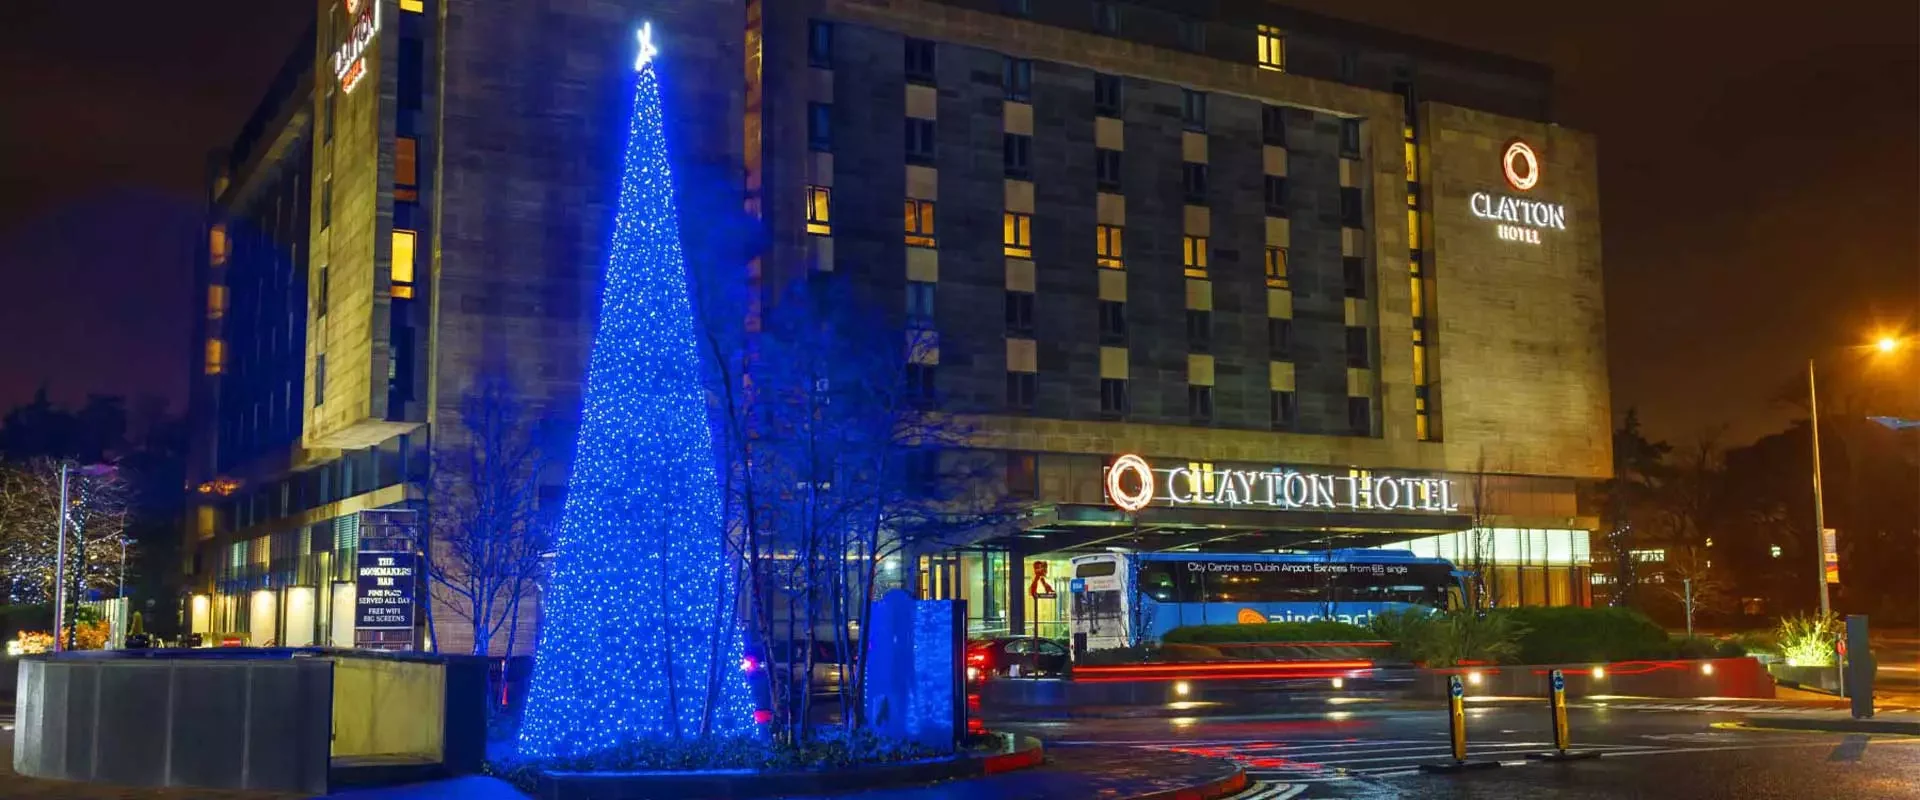 Citywest Hotel Christmas Lighting Project